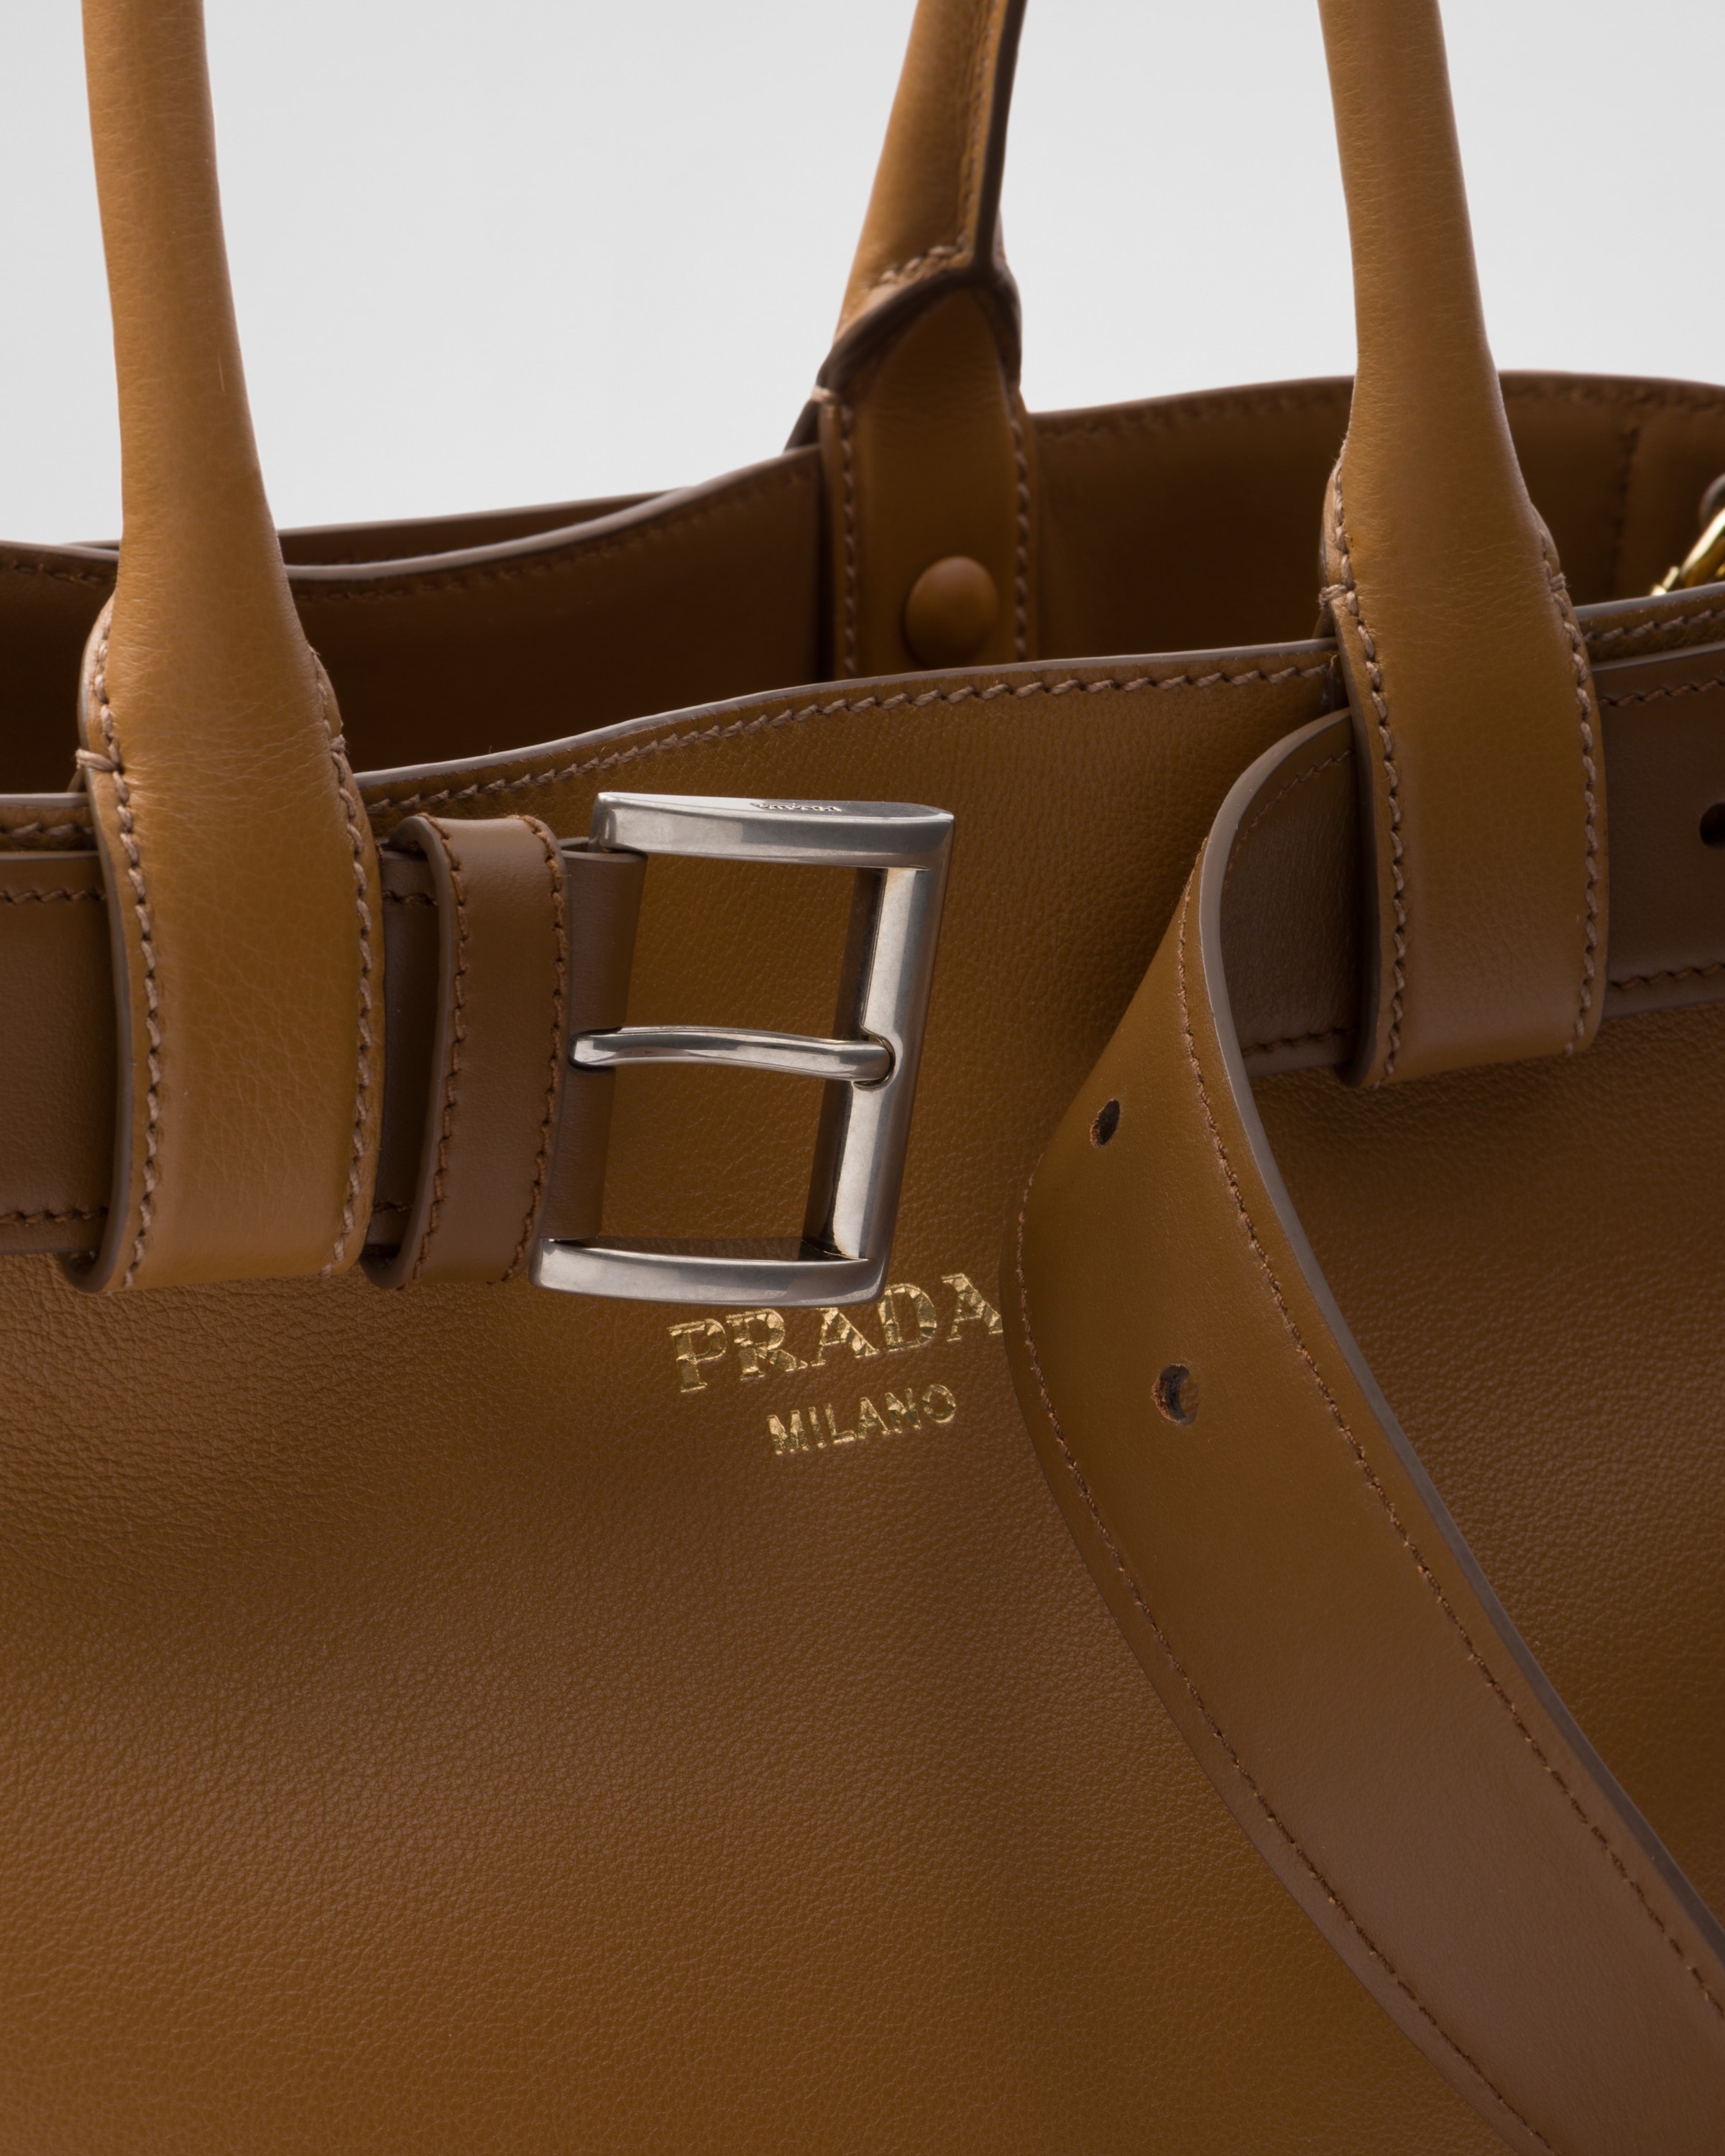 Prada Buckle large leather handbag with belt - 6